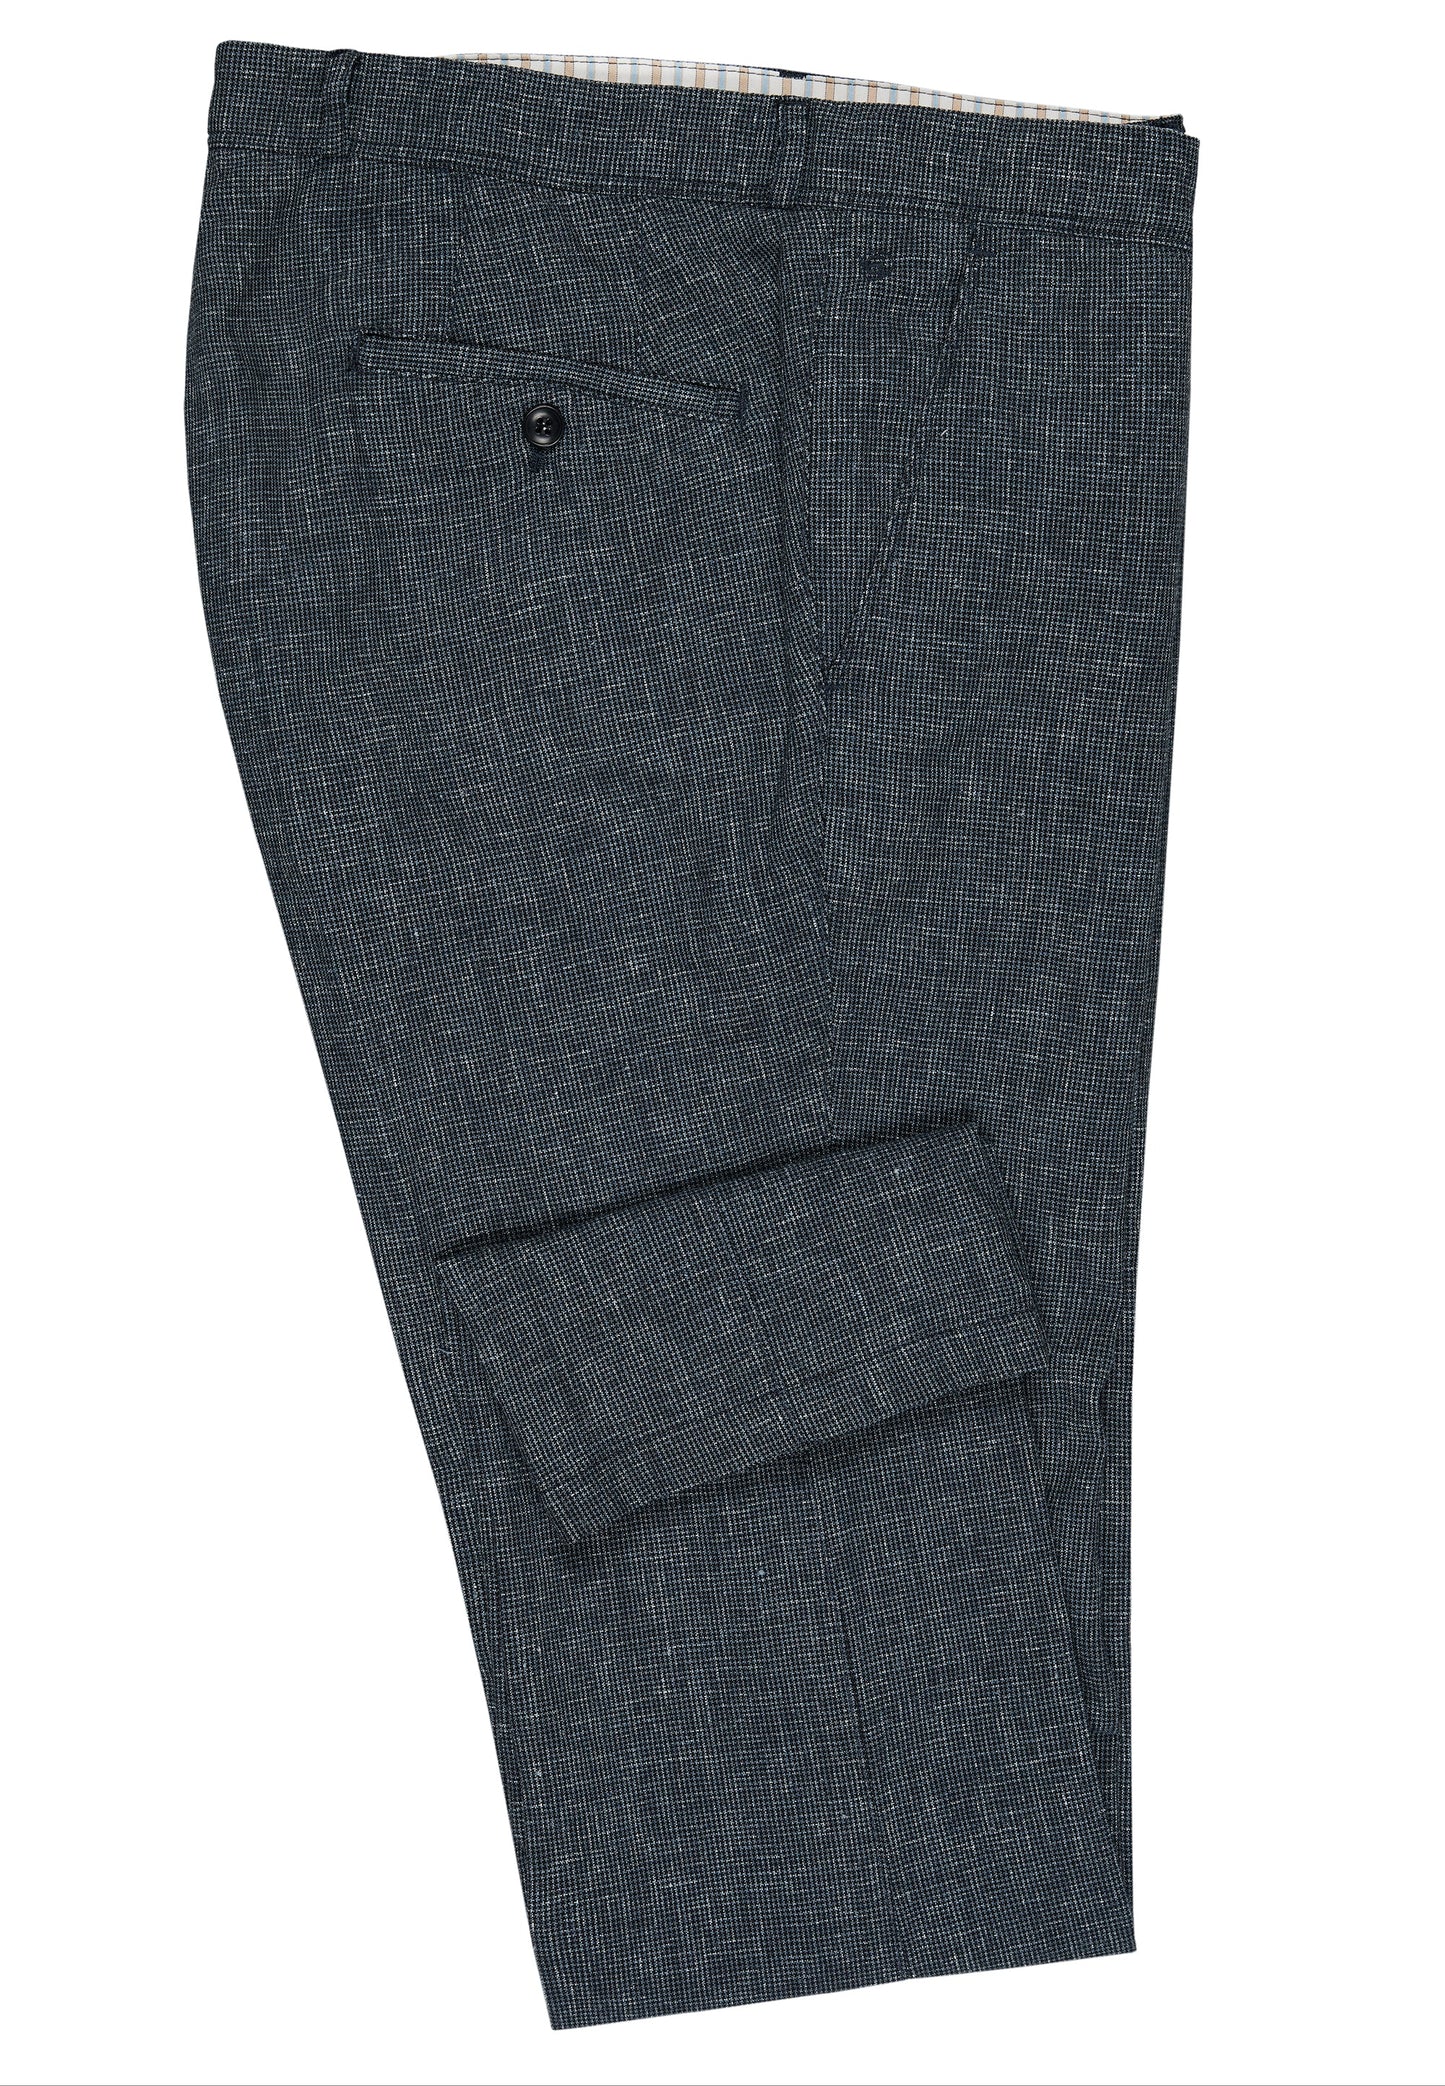 Hose/Trousers CG Todi - 01.549N1 / 139393